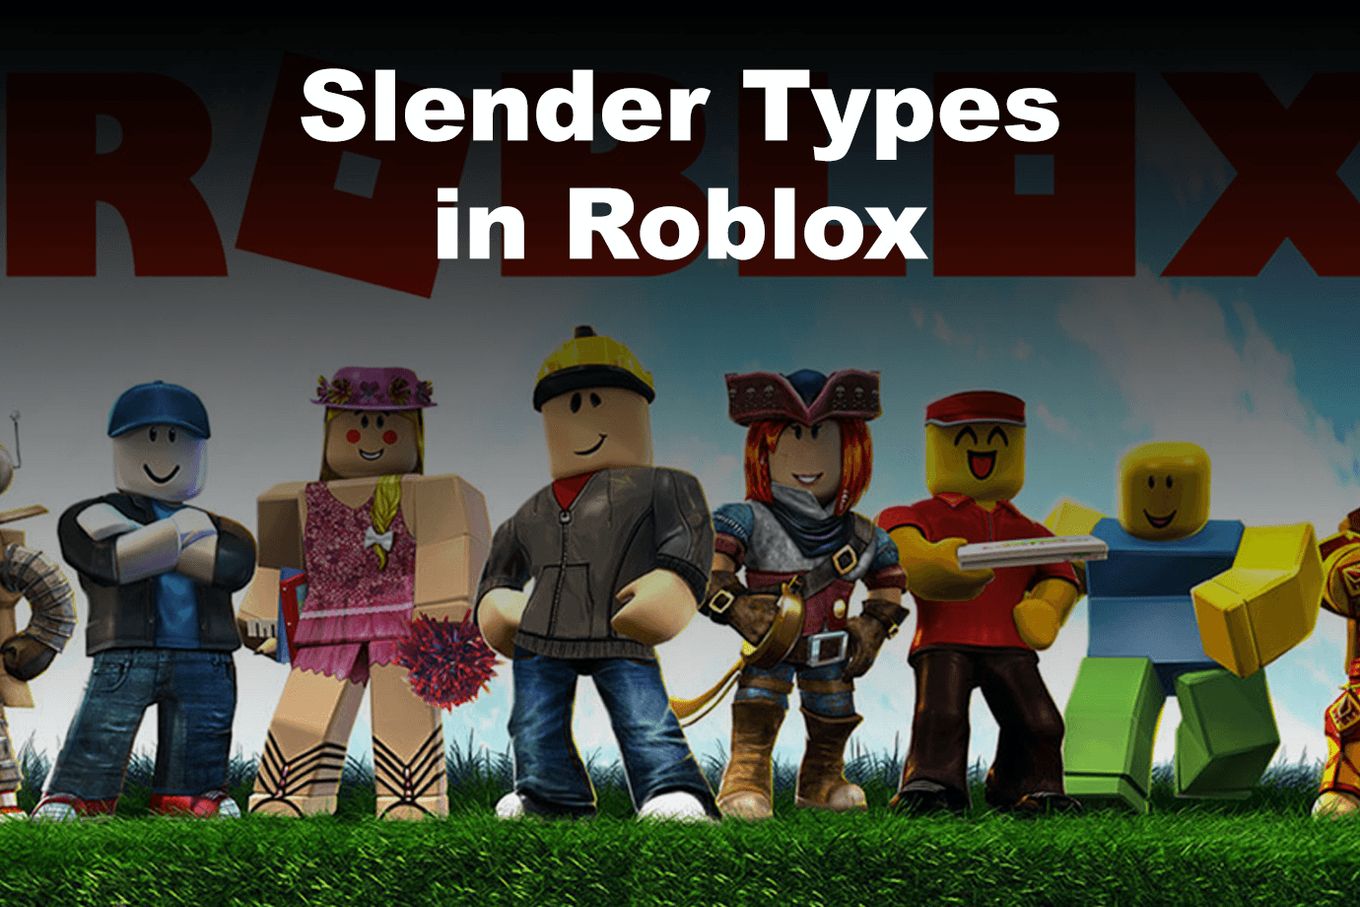 Slender Types in Roblox